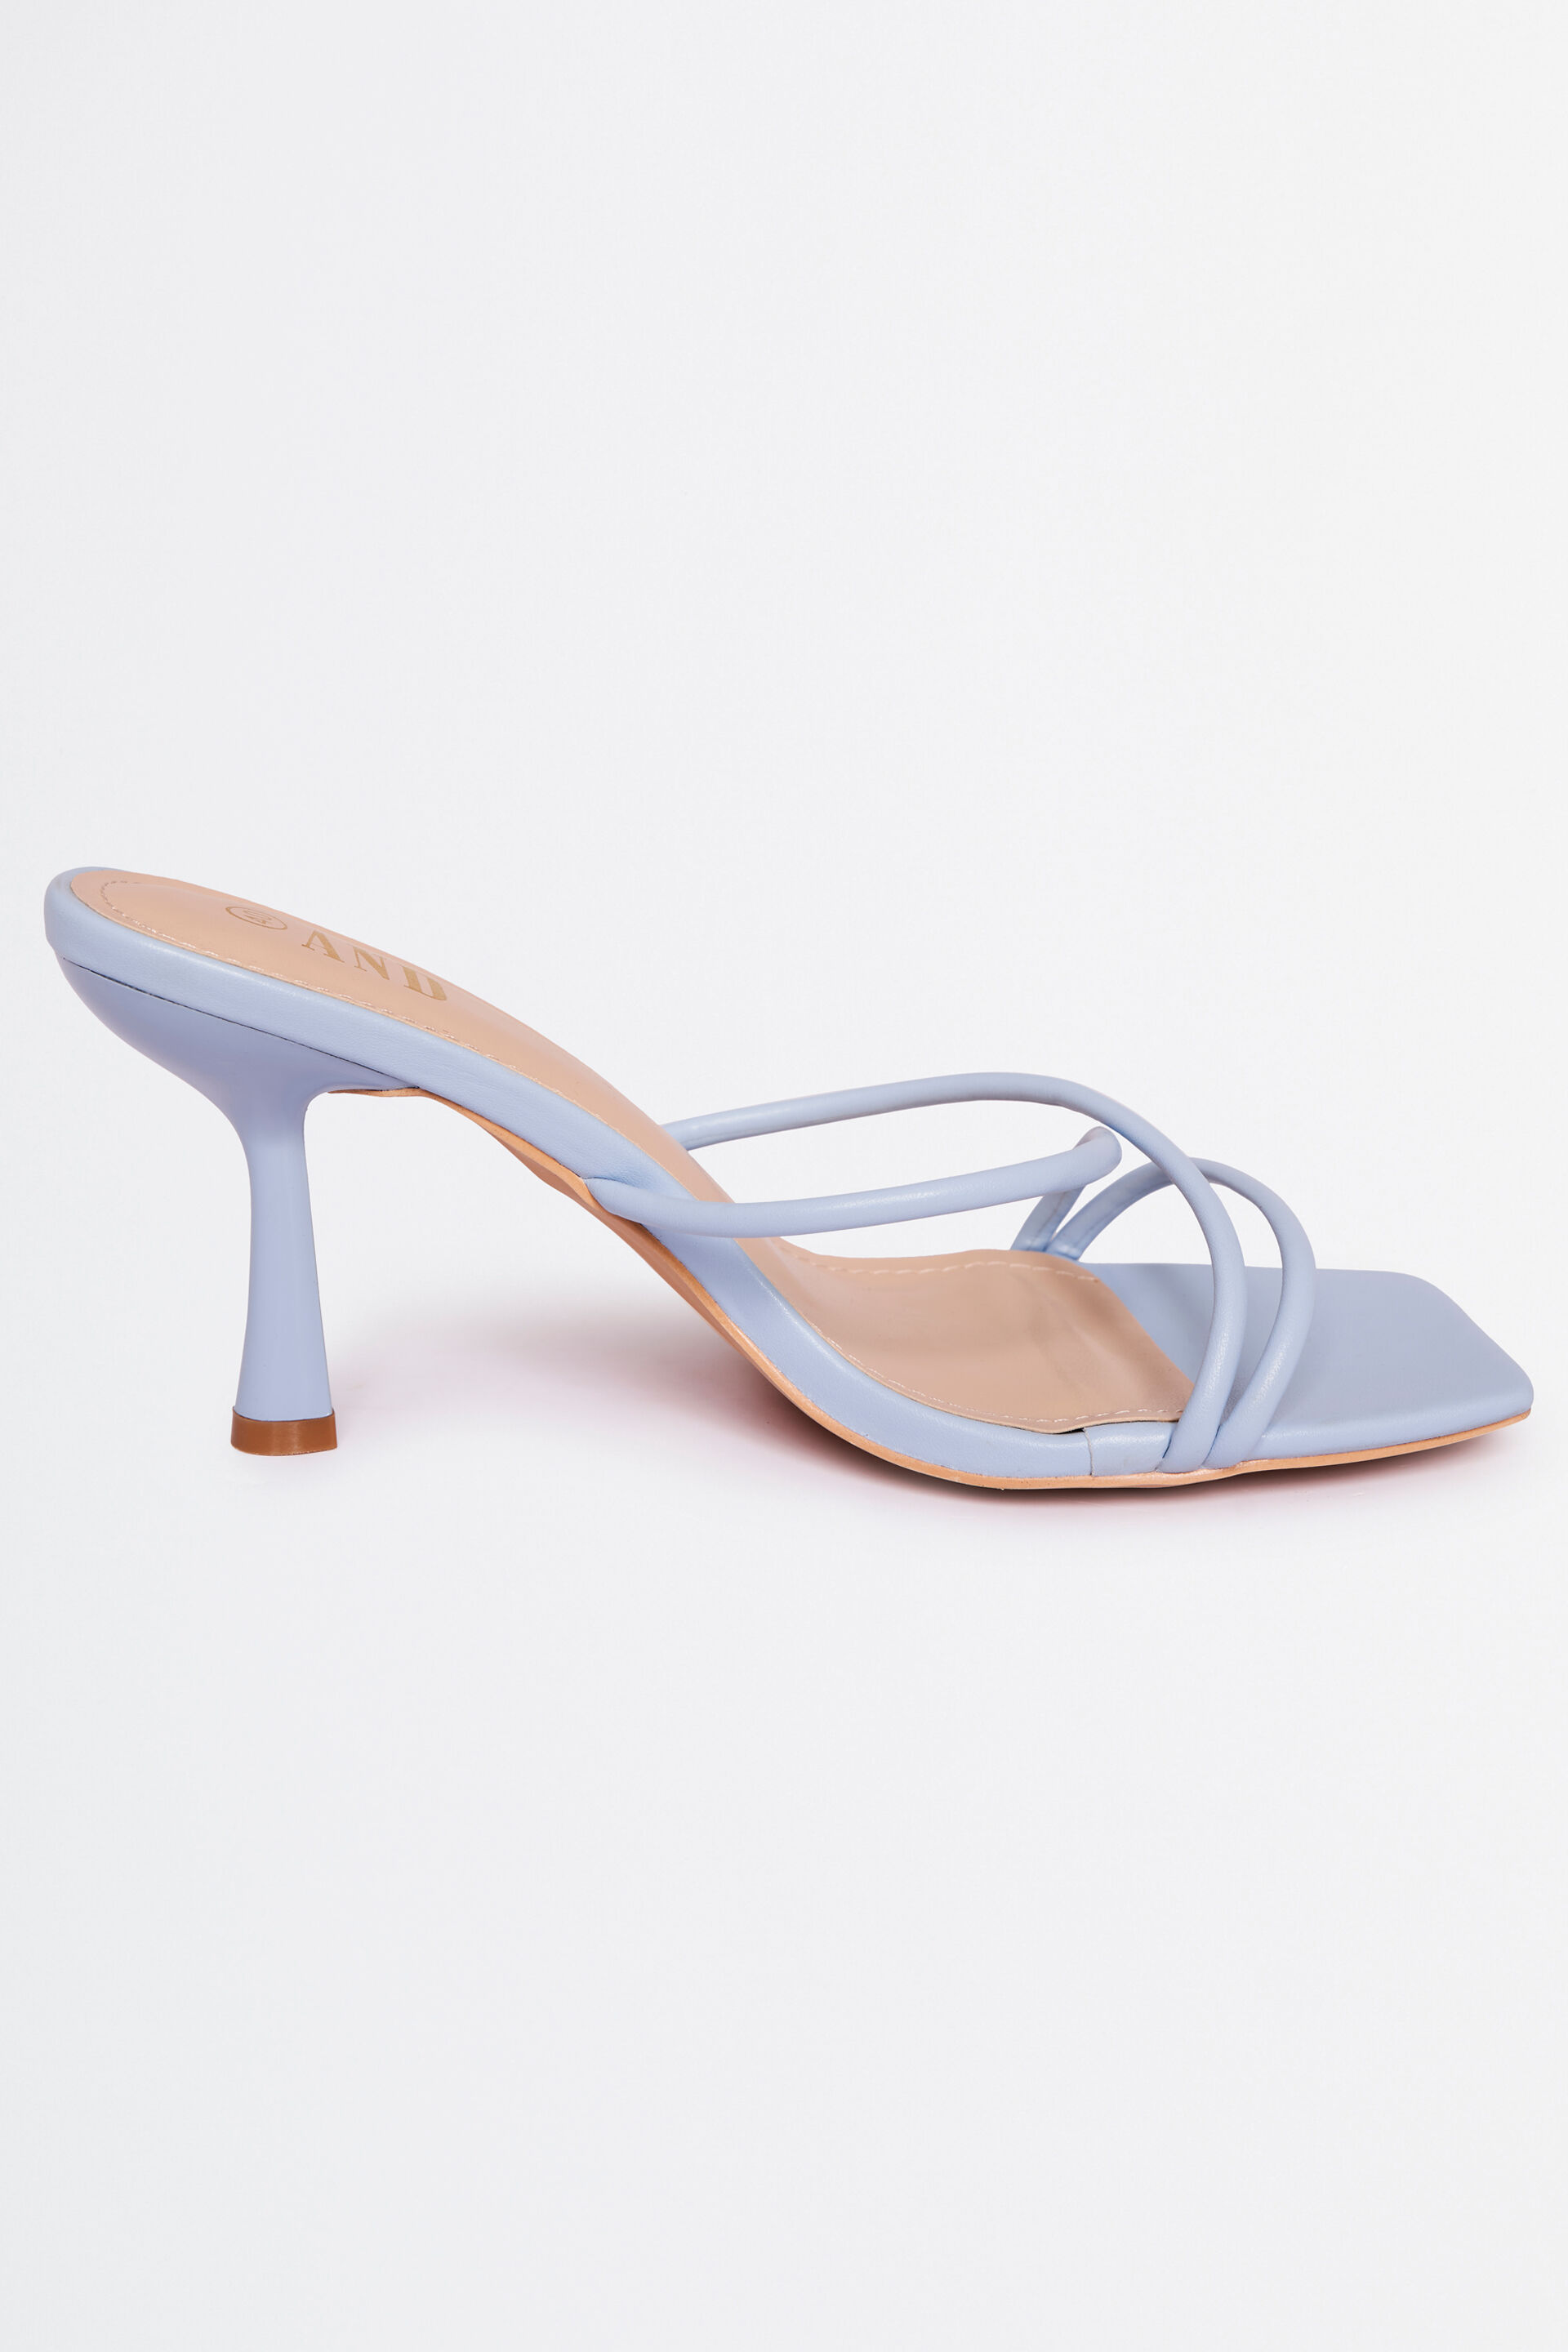 Buy Best blue heels Online At Cheap Price, blue heels & Qatar Shopping